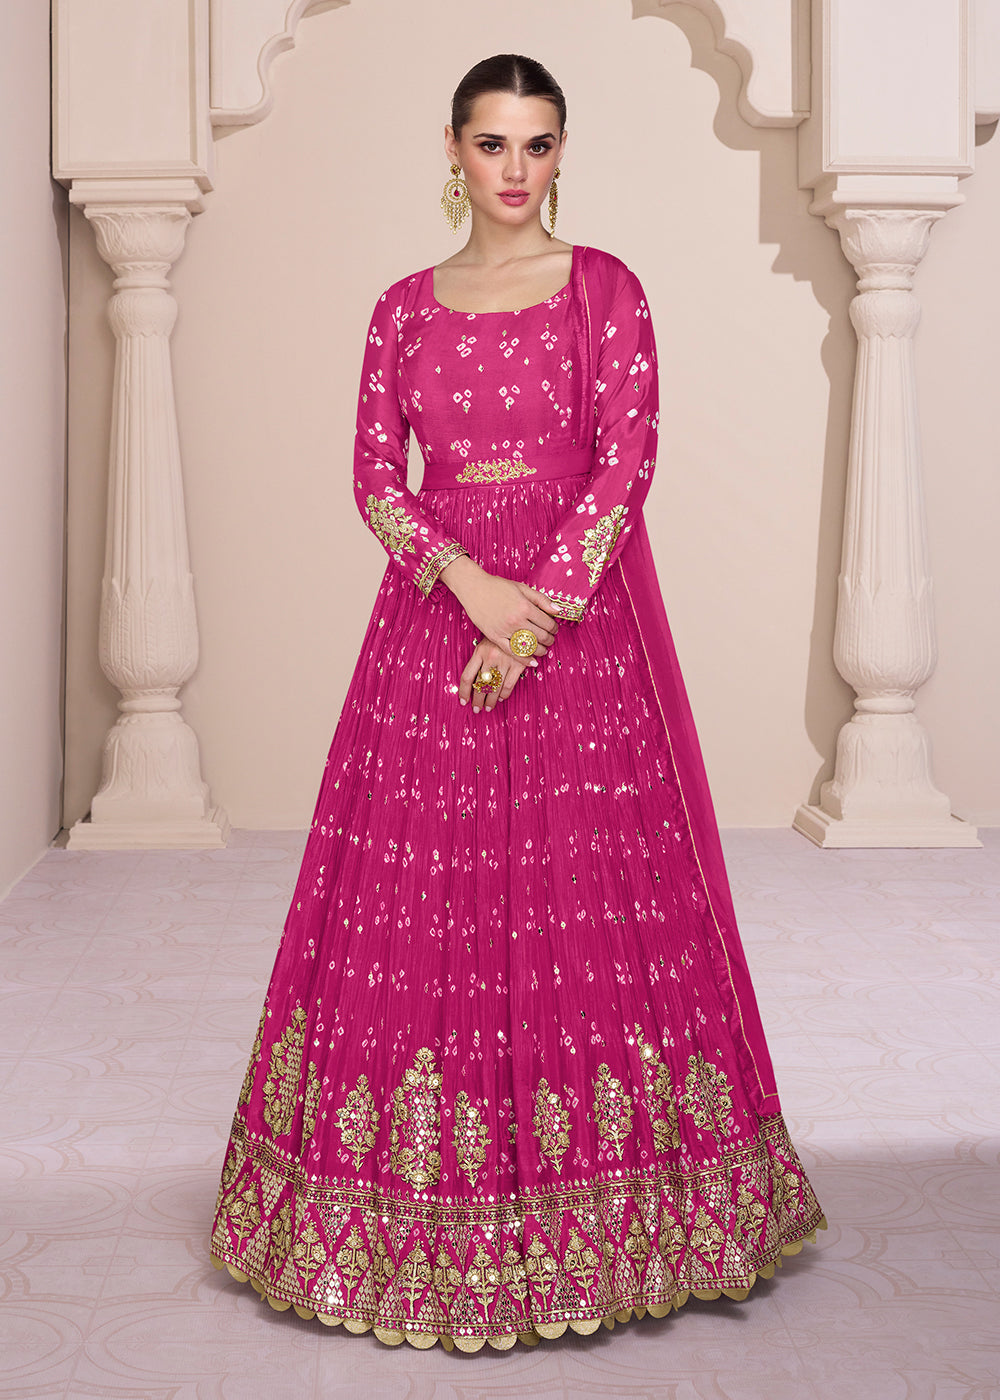 Karwa Chauth Dresses Online India 2021 | Special dresses, Dresses online,  Dress up